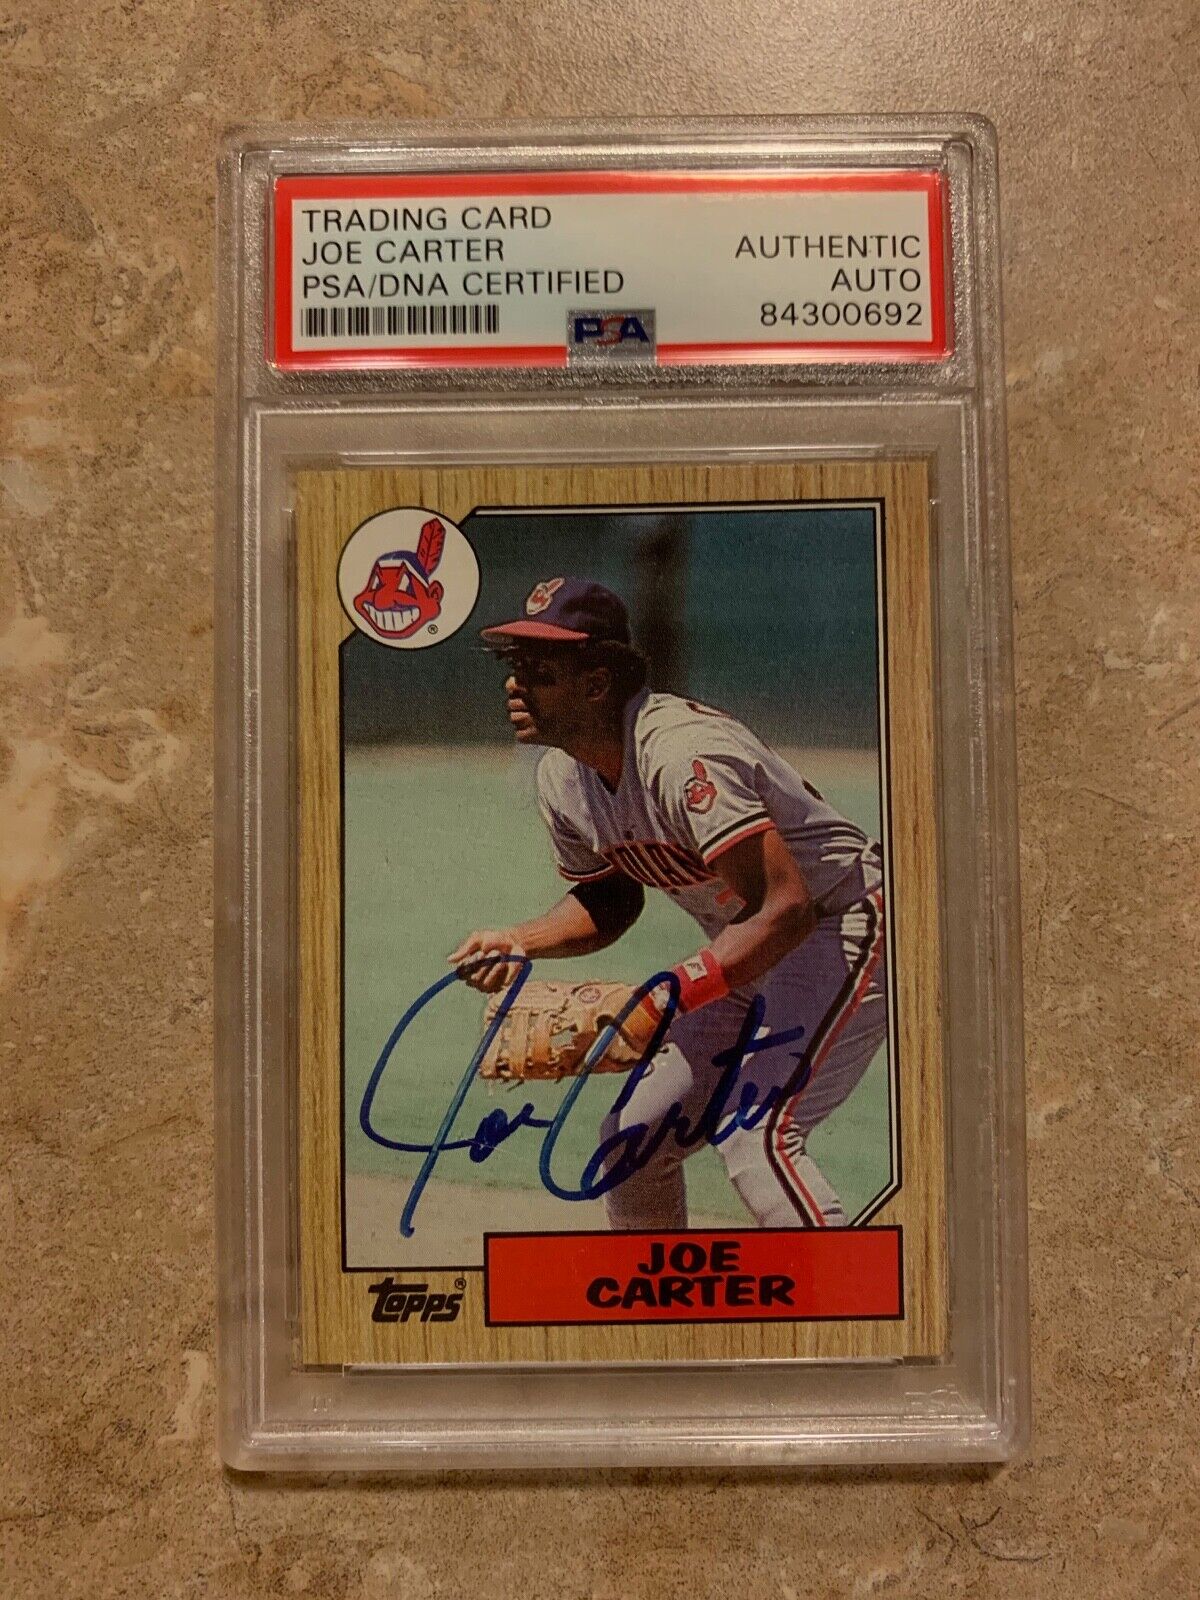 Joe Carter Indians Autographed 1985 Topps Baseball Card PSA Certified Slabbed